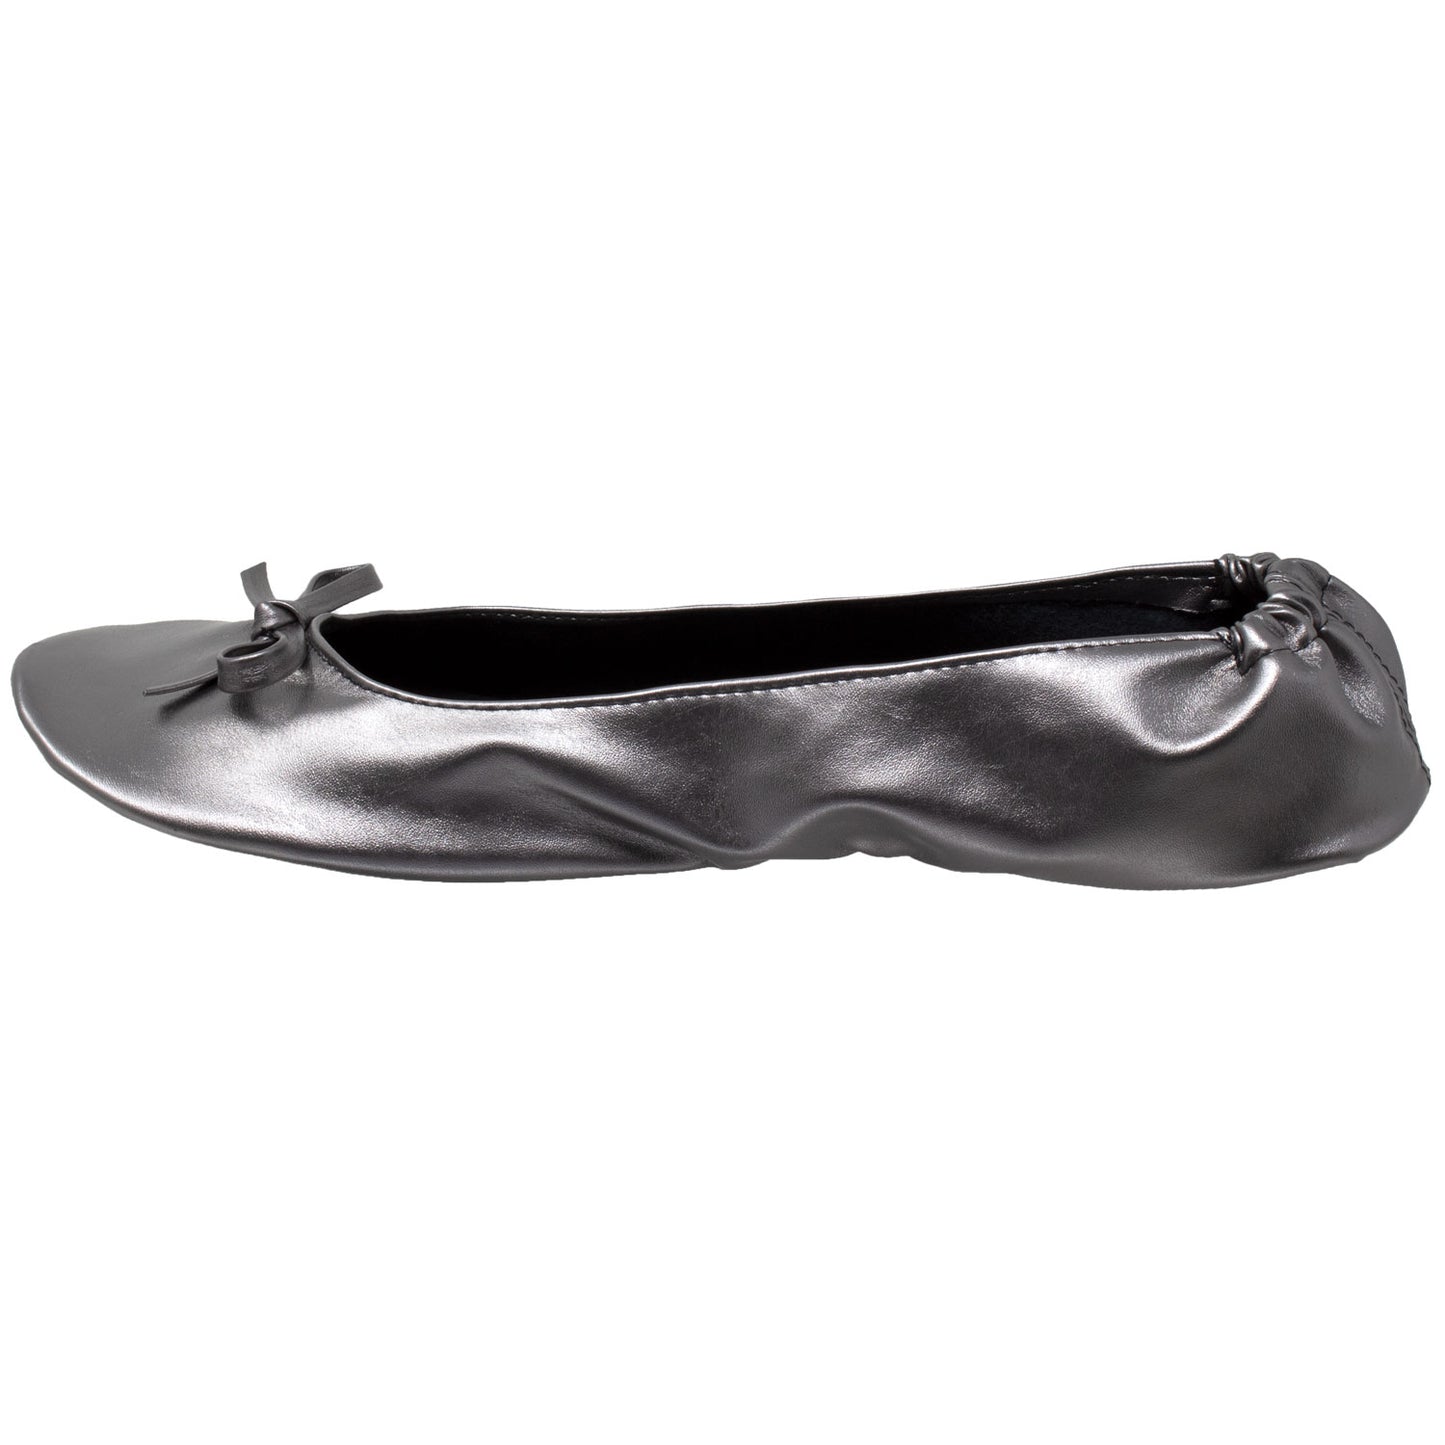 Foldable Ballet Flats Women's Travel Portable Comfortable Shoes Gray PU SOBEYO